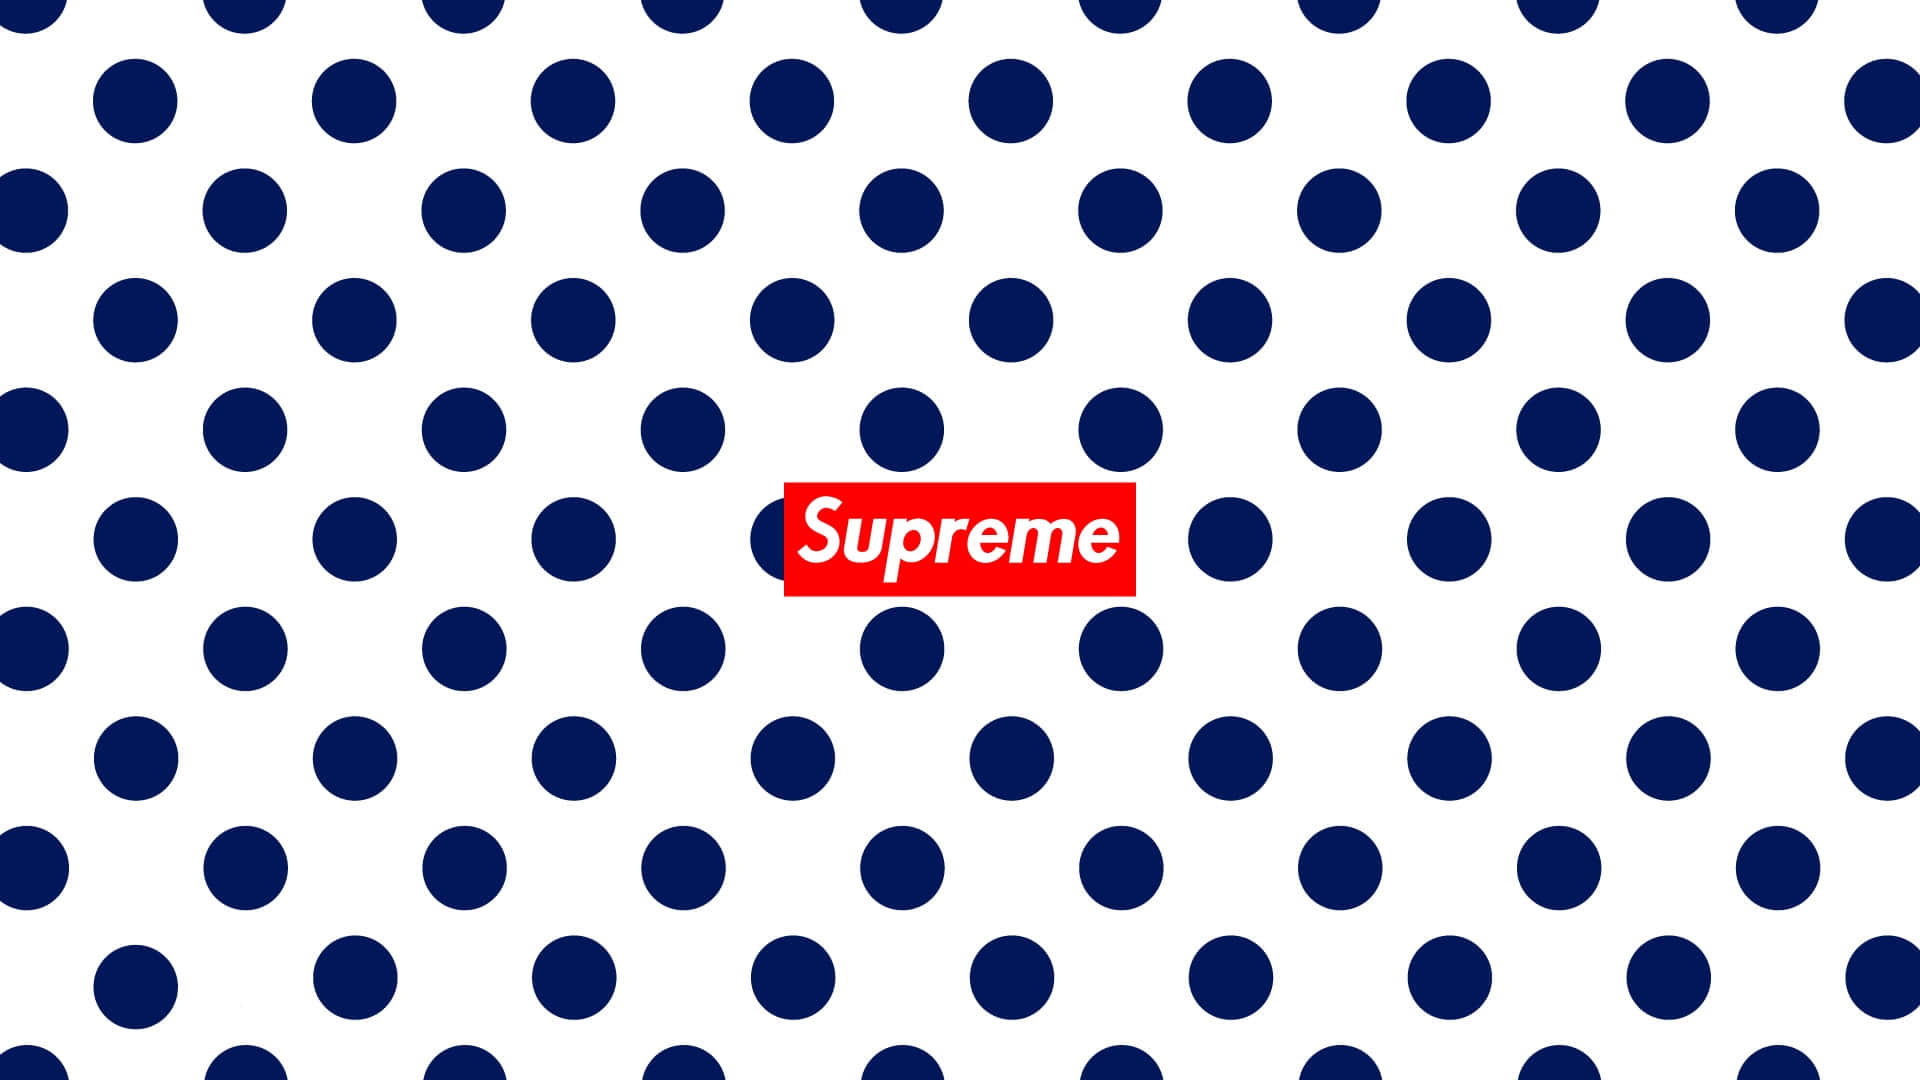 Free Supreme Logo Wallpaper Downloads, [200+] Supreme Logo Wallpapers for  FREE | Wallpapers.com